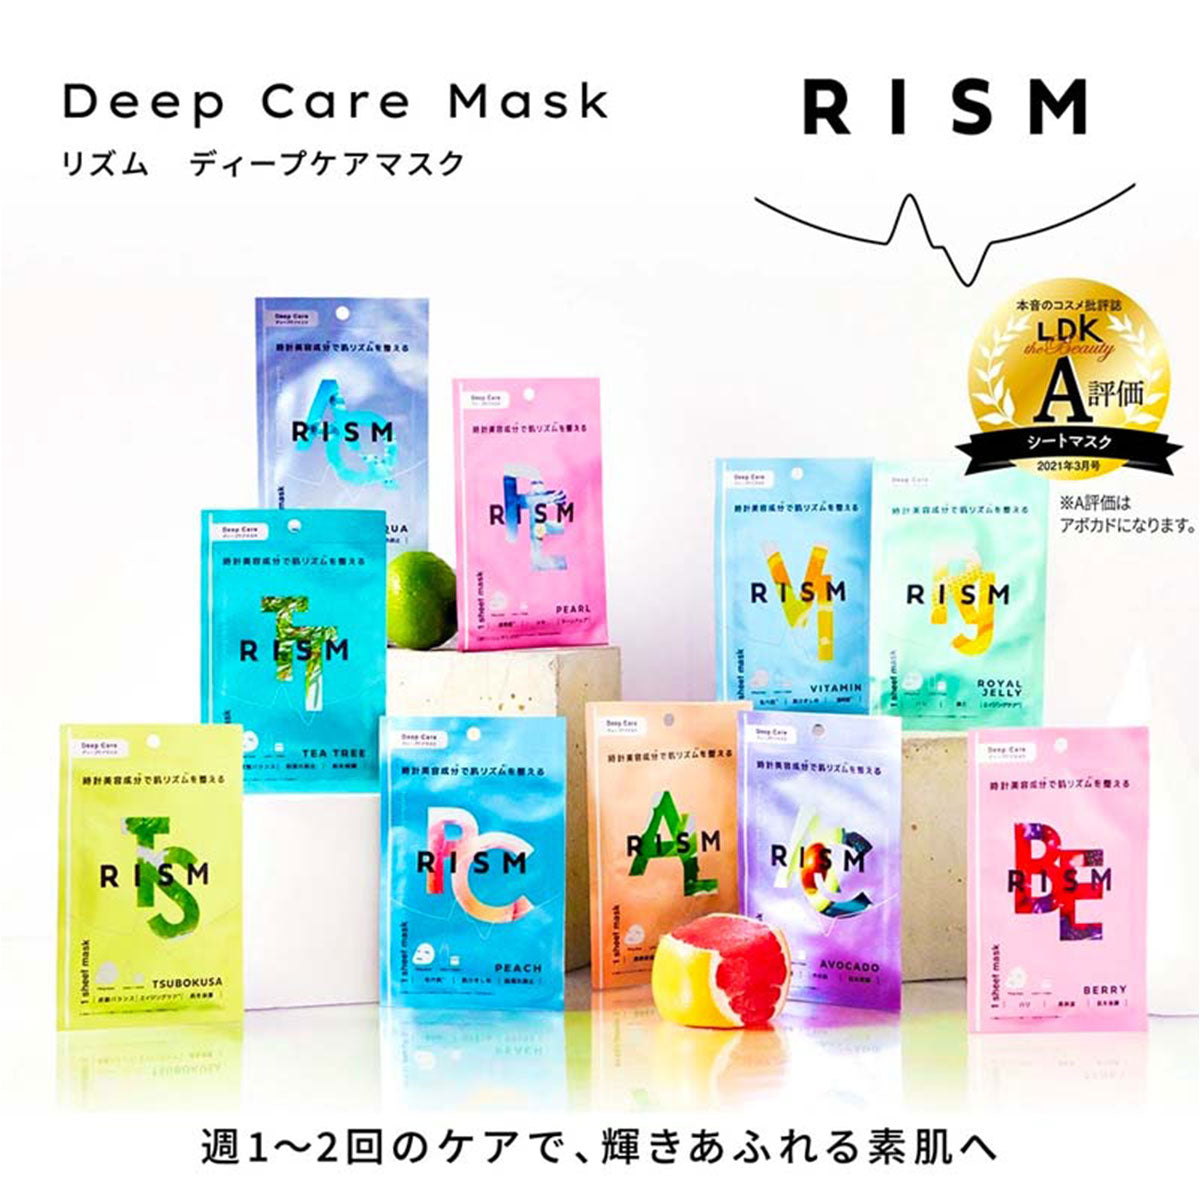 RJ Deep Care Mask Royal Jelly #Tightening 1 Sheet